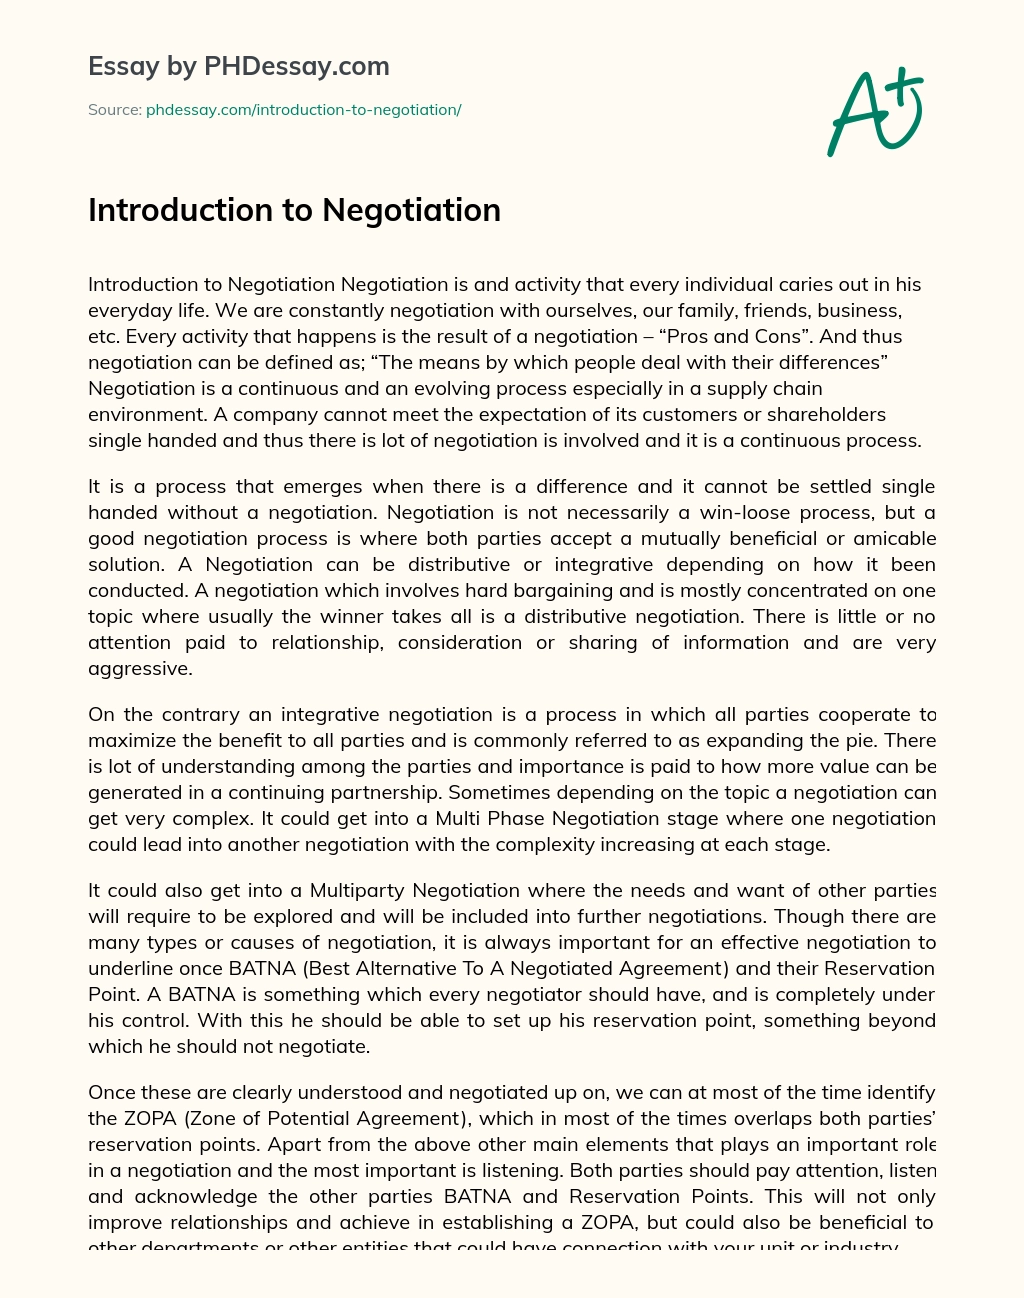 Introduction to Negotiation : BATNA essay